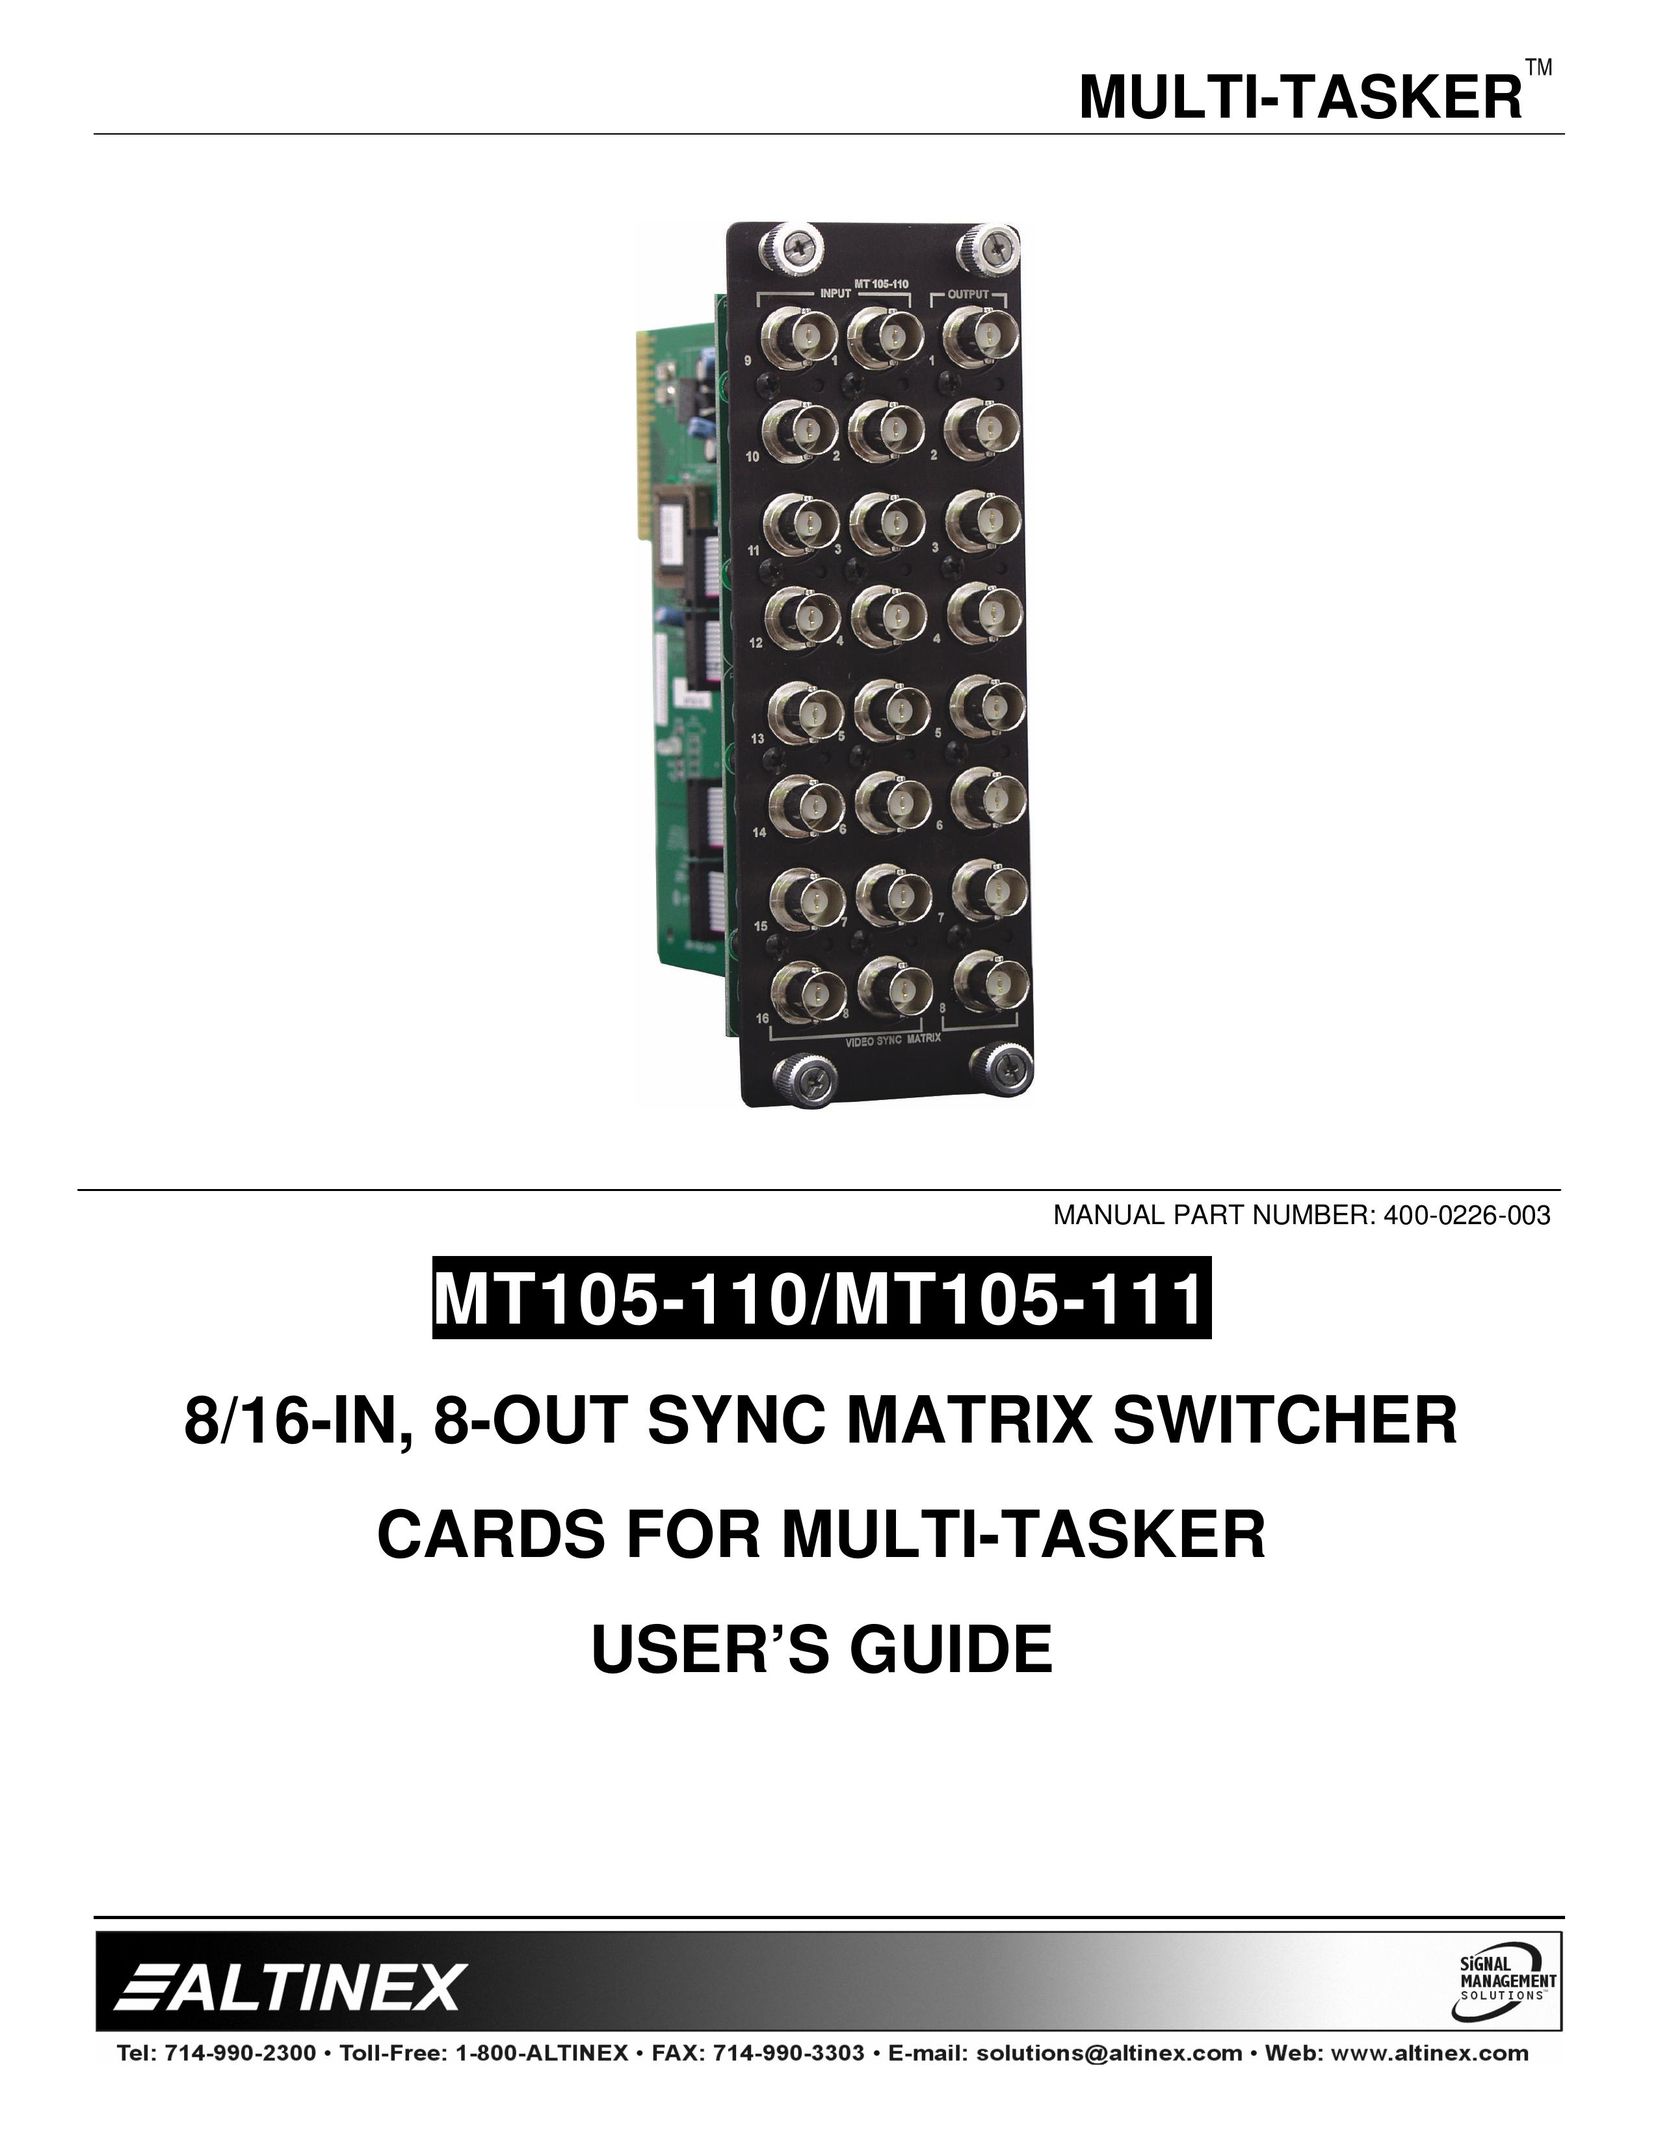 Altinex MT105-110 Switch User Manual